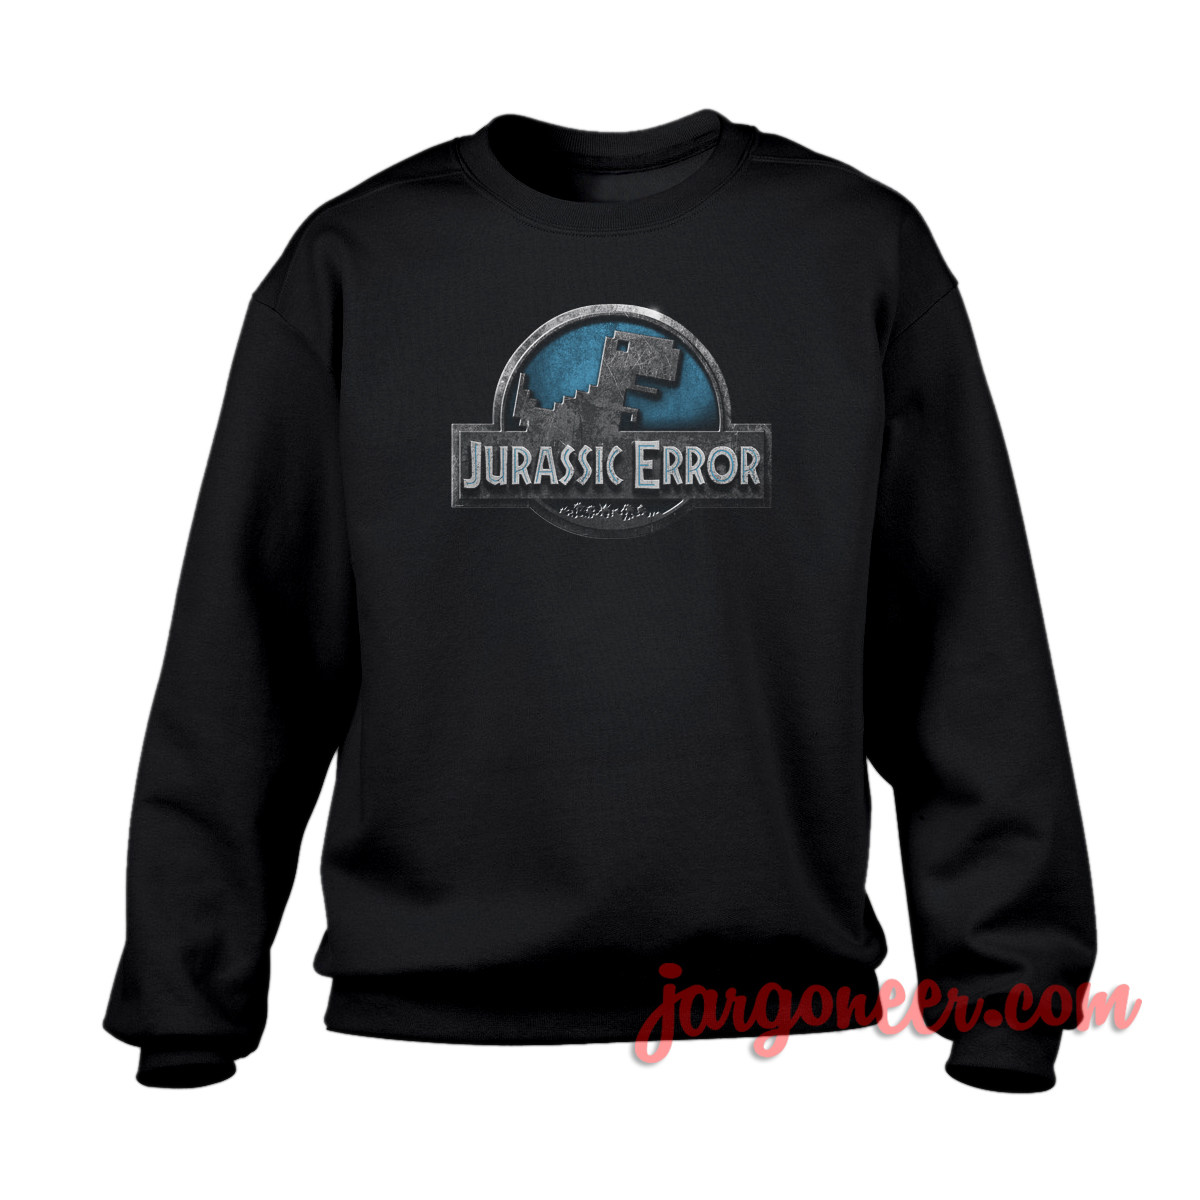 Jurassic Error - Shop Unique Graphic Cool Shirt Designs